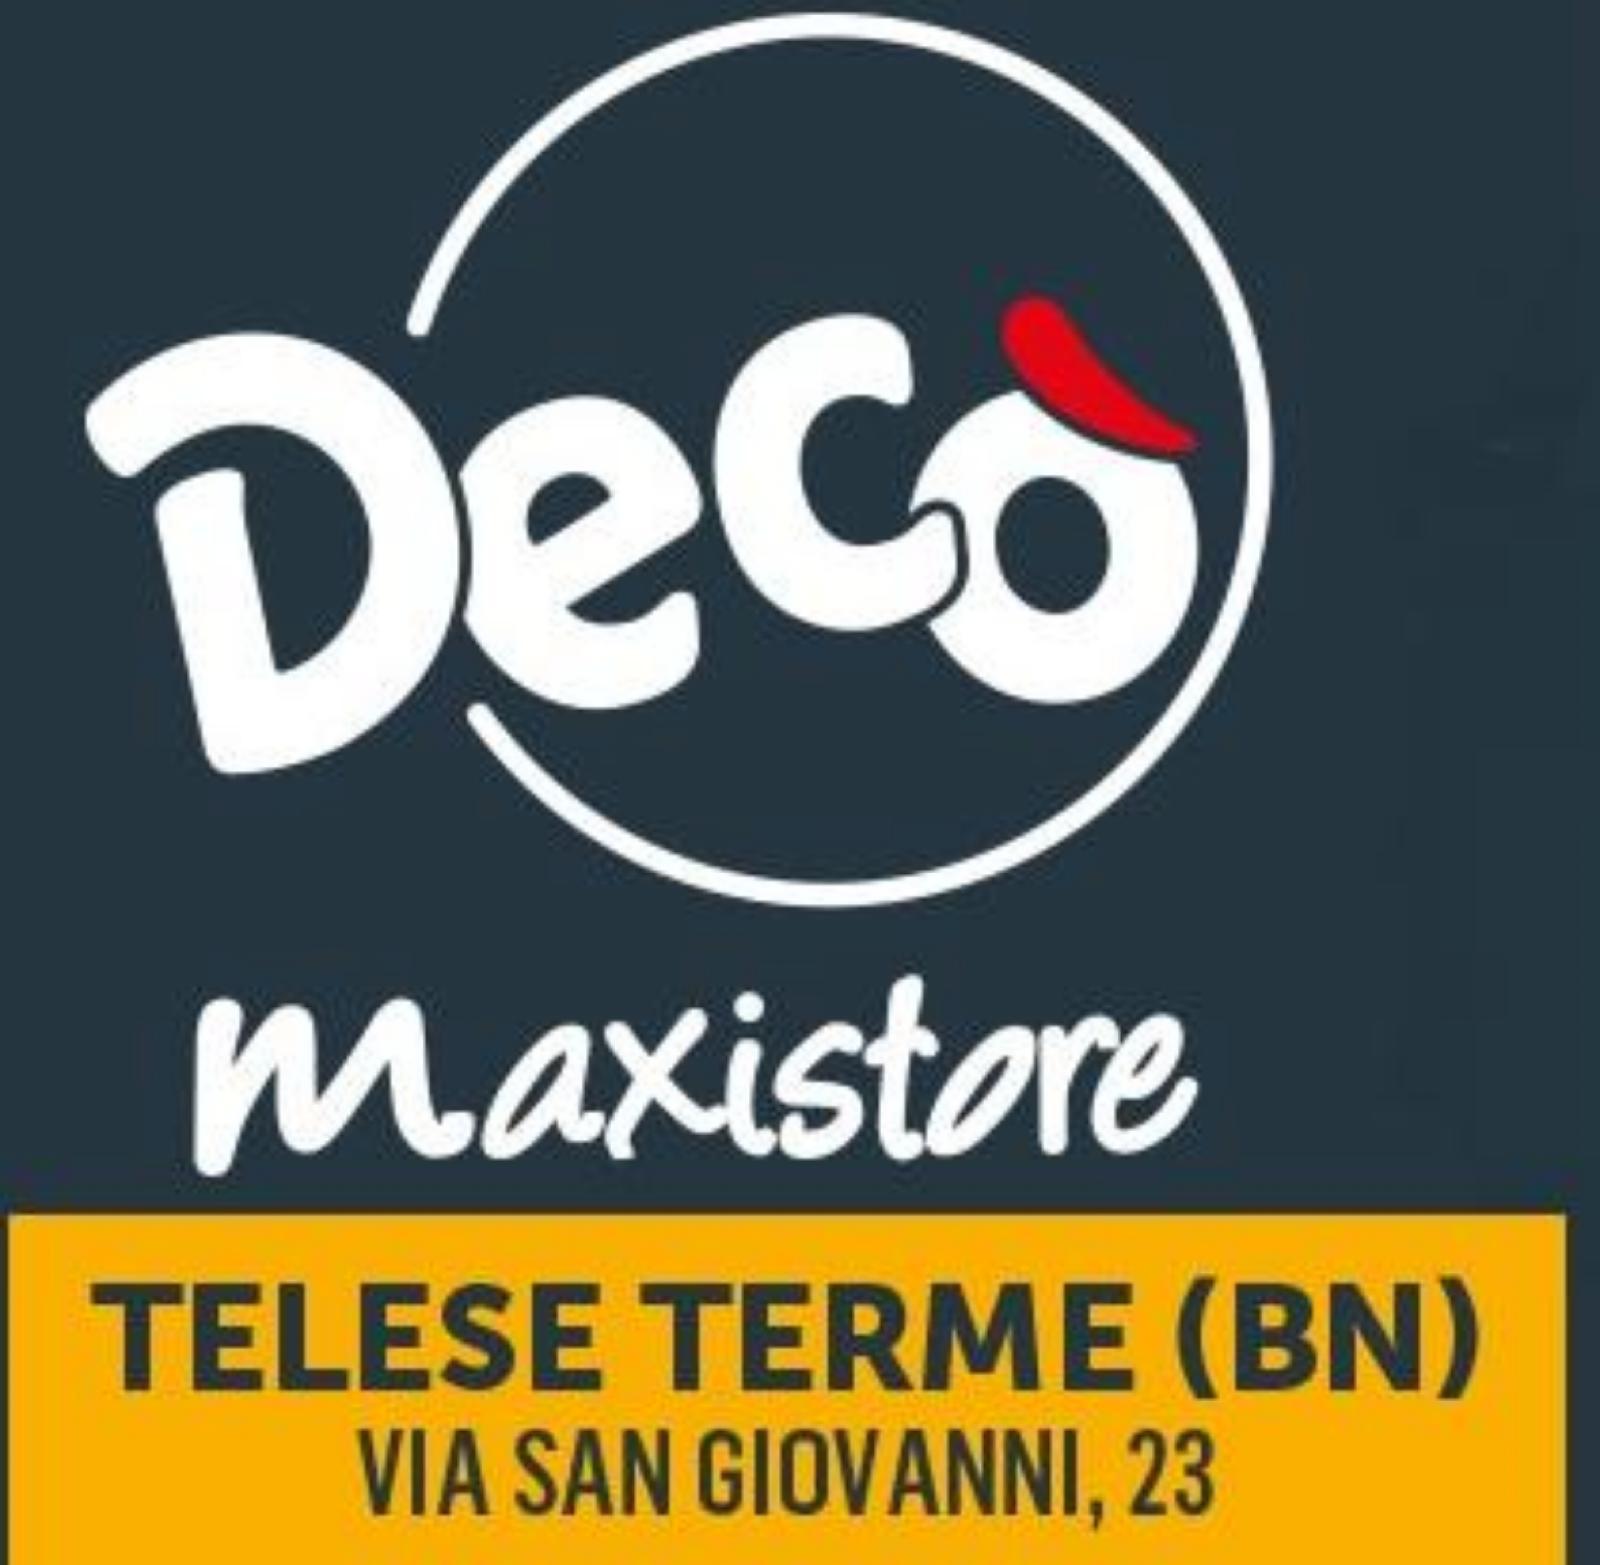 Maxi Store Telese